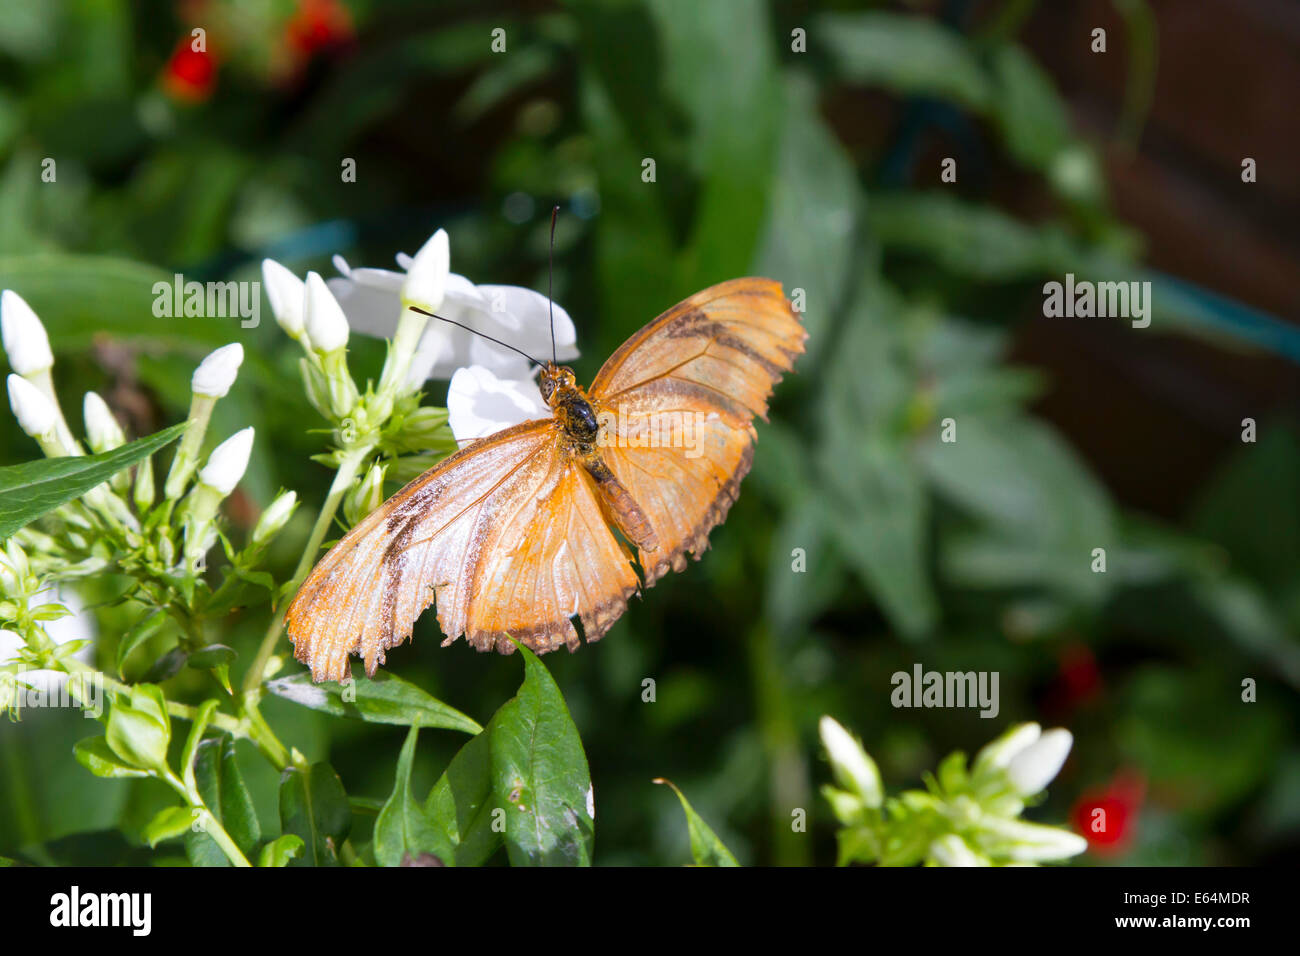 Orange butterfly feeding on white flower from above Stock Photo